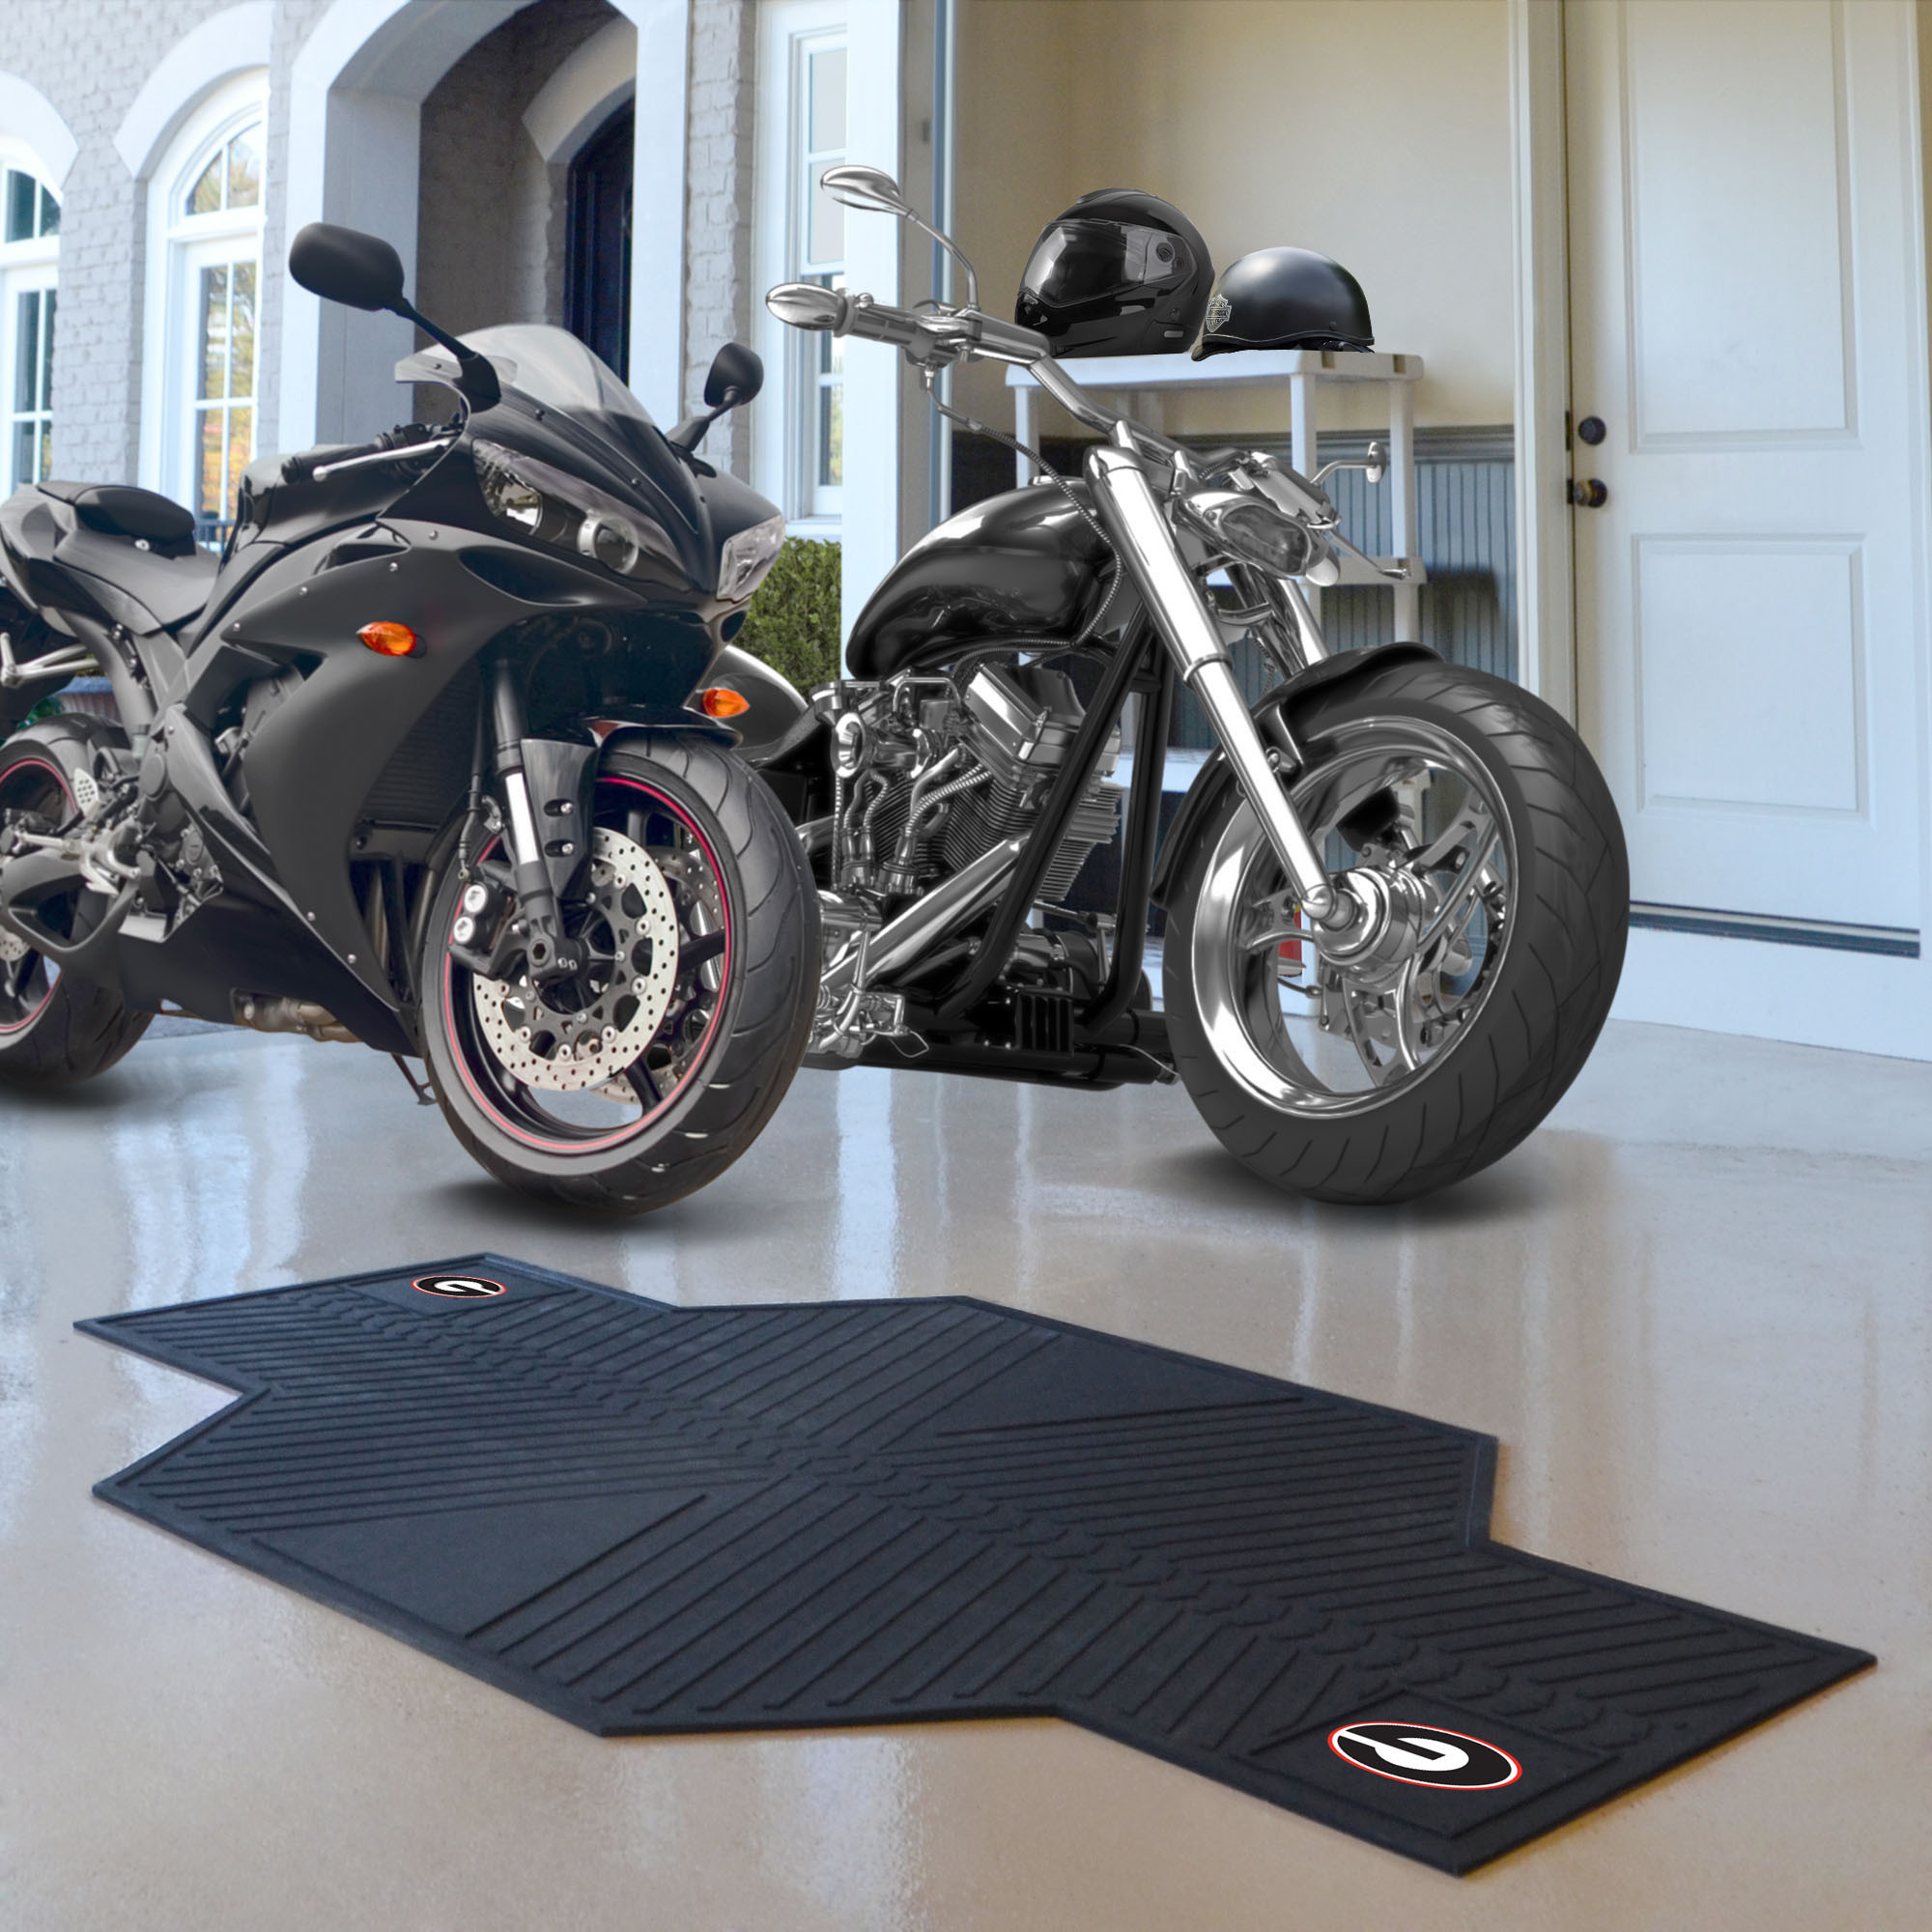 Motorcycle Garage, Pit & Workshop Floor Mats